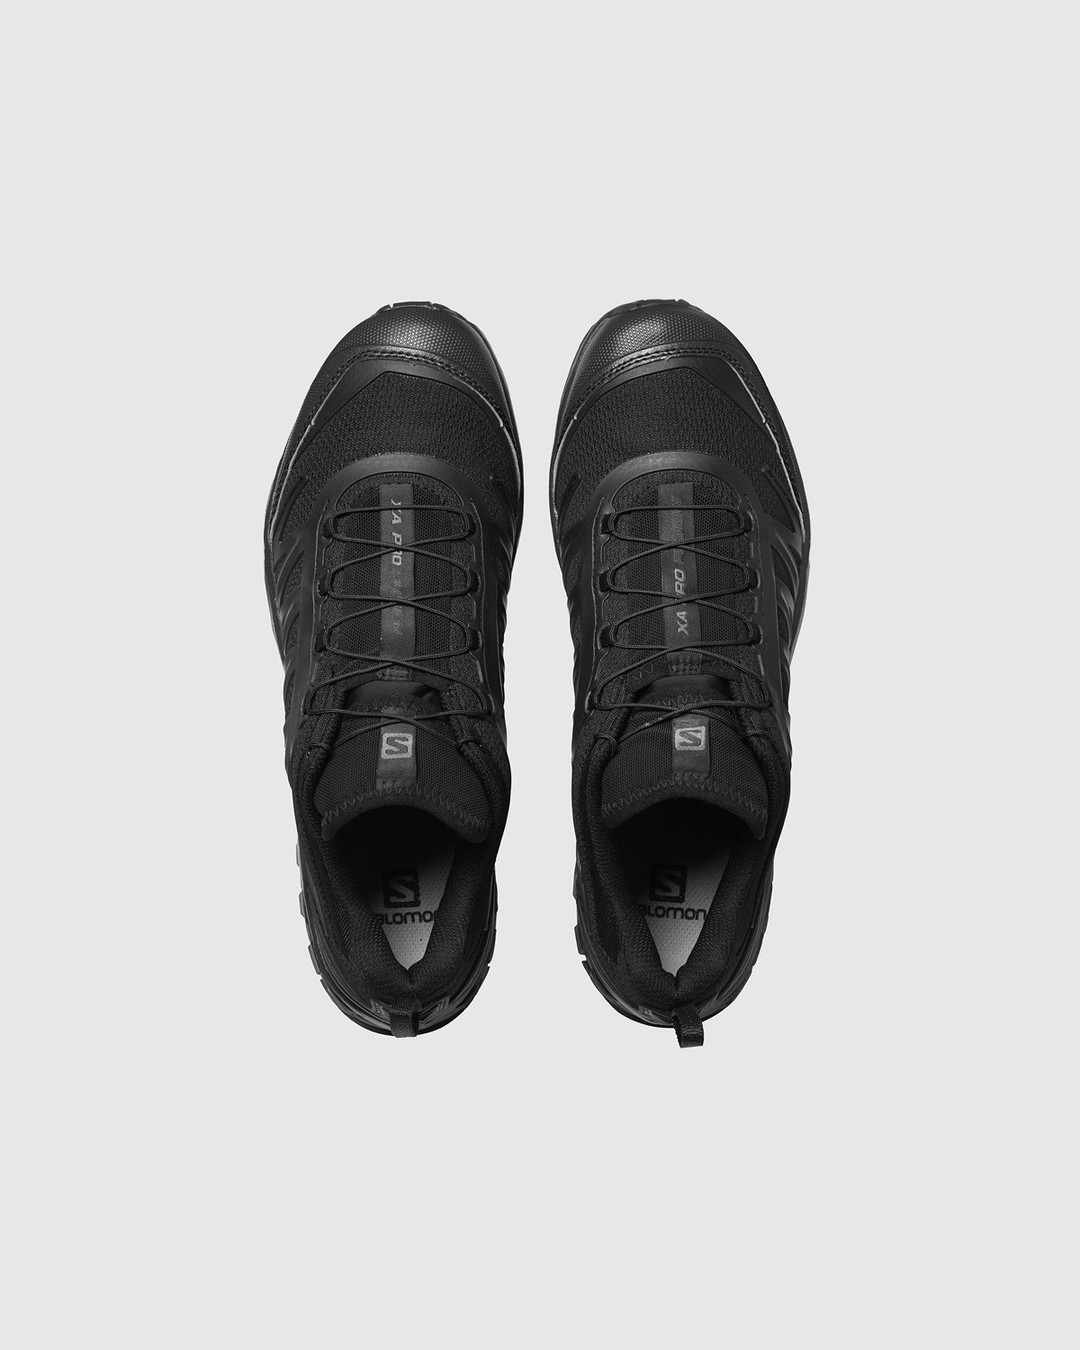 Salomon – XA-PRO FUSION ADVANCED Black/Black/Magnet - Low Top Sneakers - Black - Image 3